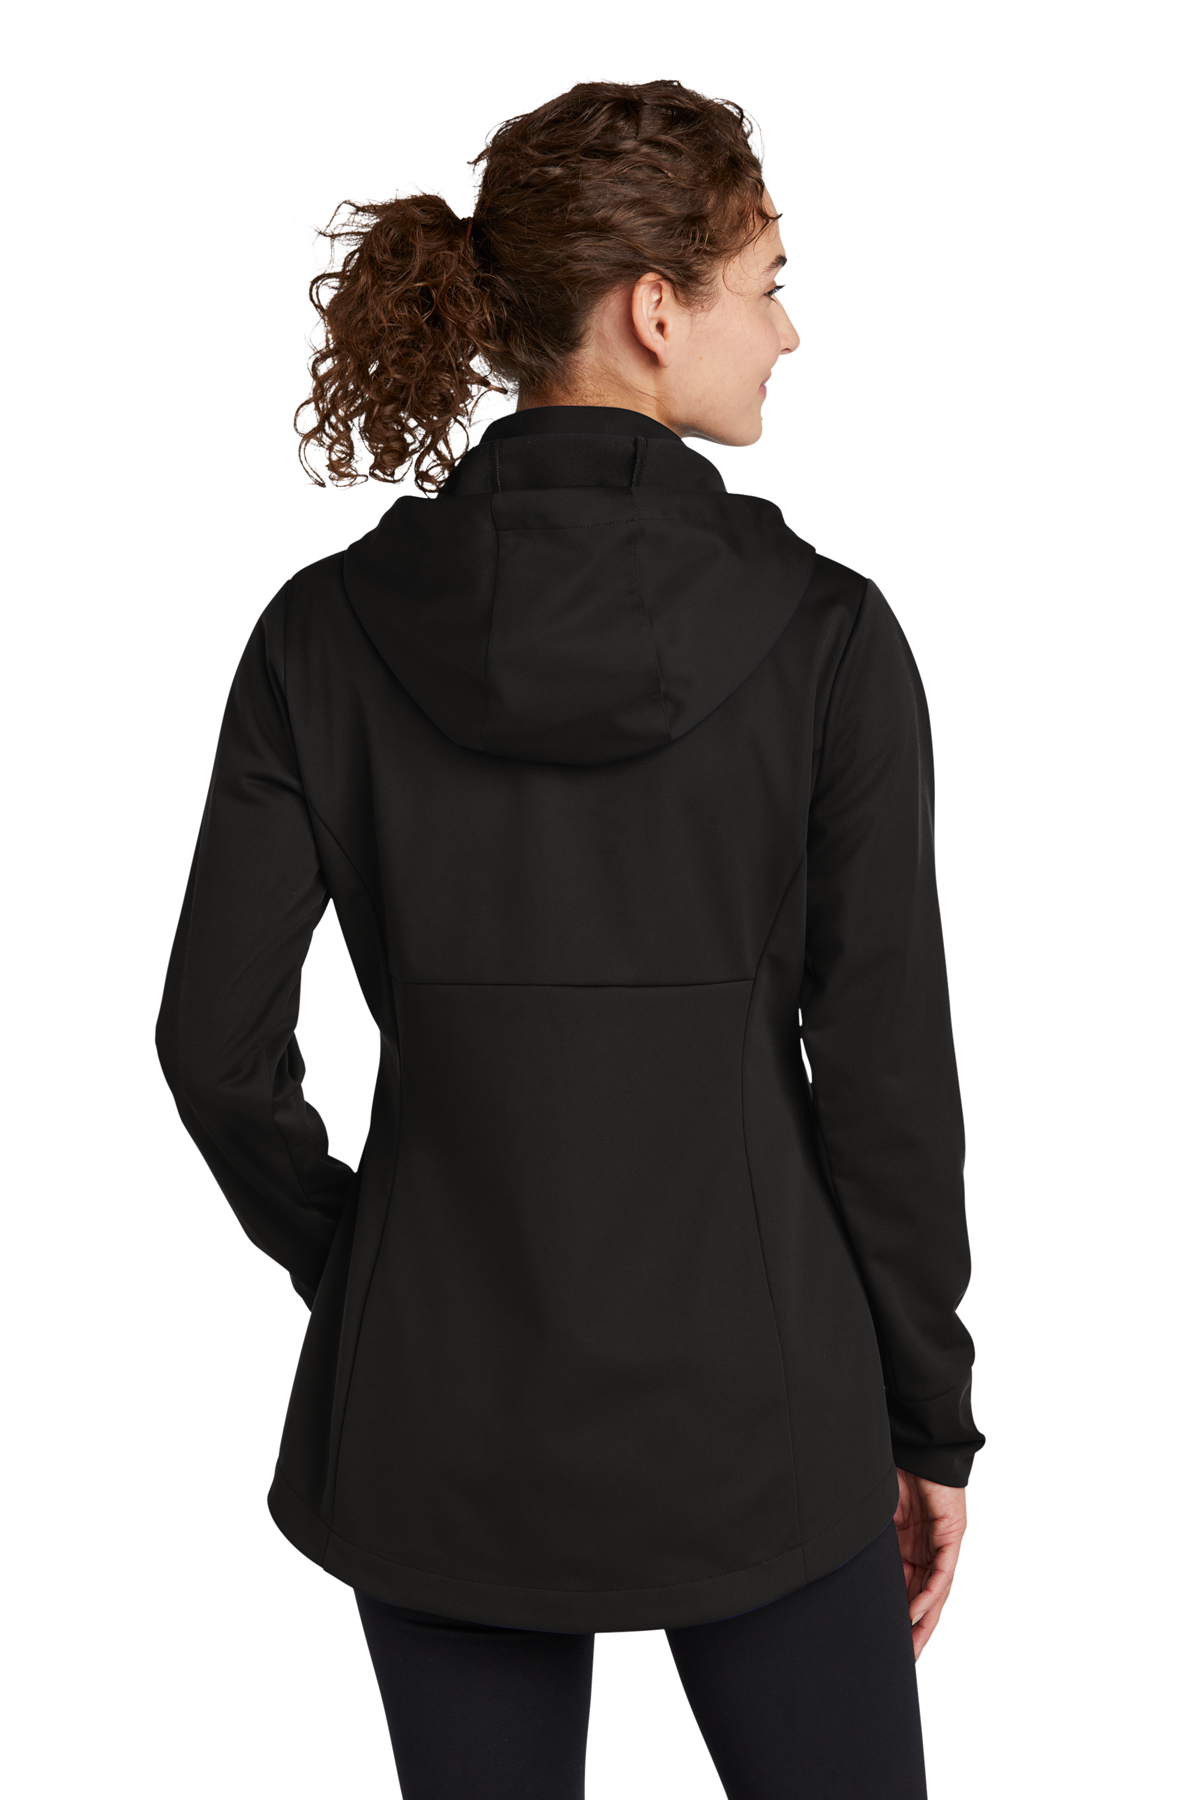 | Hooded | Sport-Tek Ladies Shell Soft SanMar Jacket Product